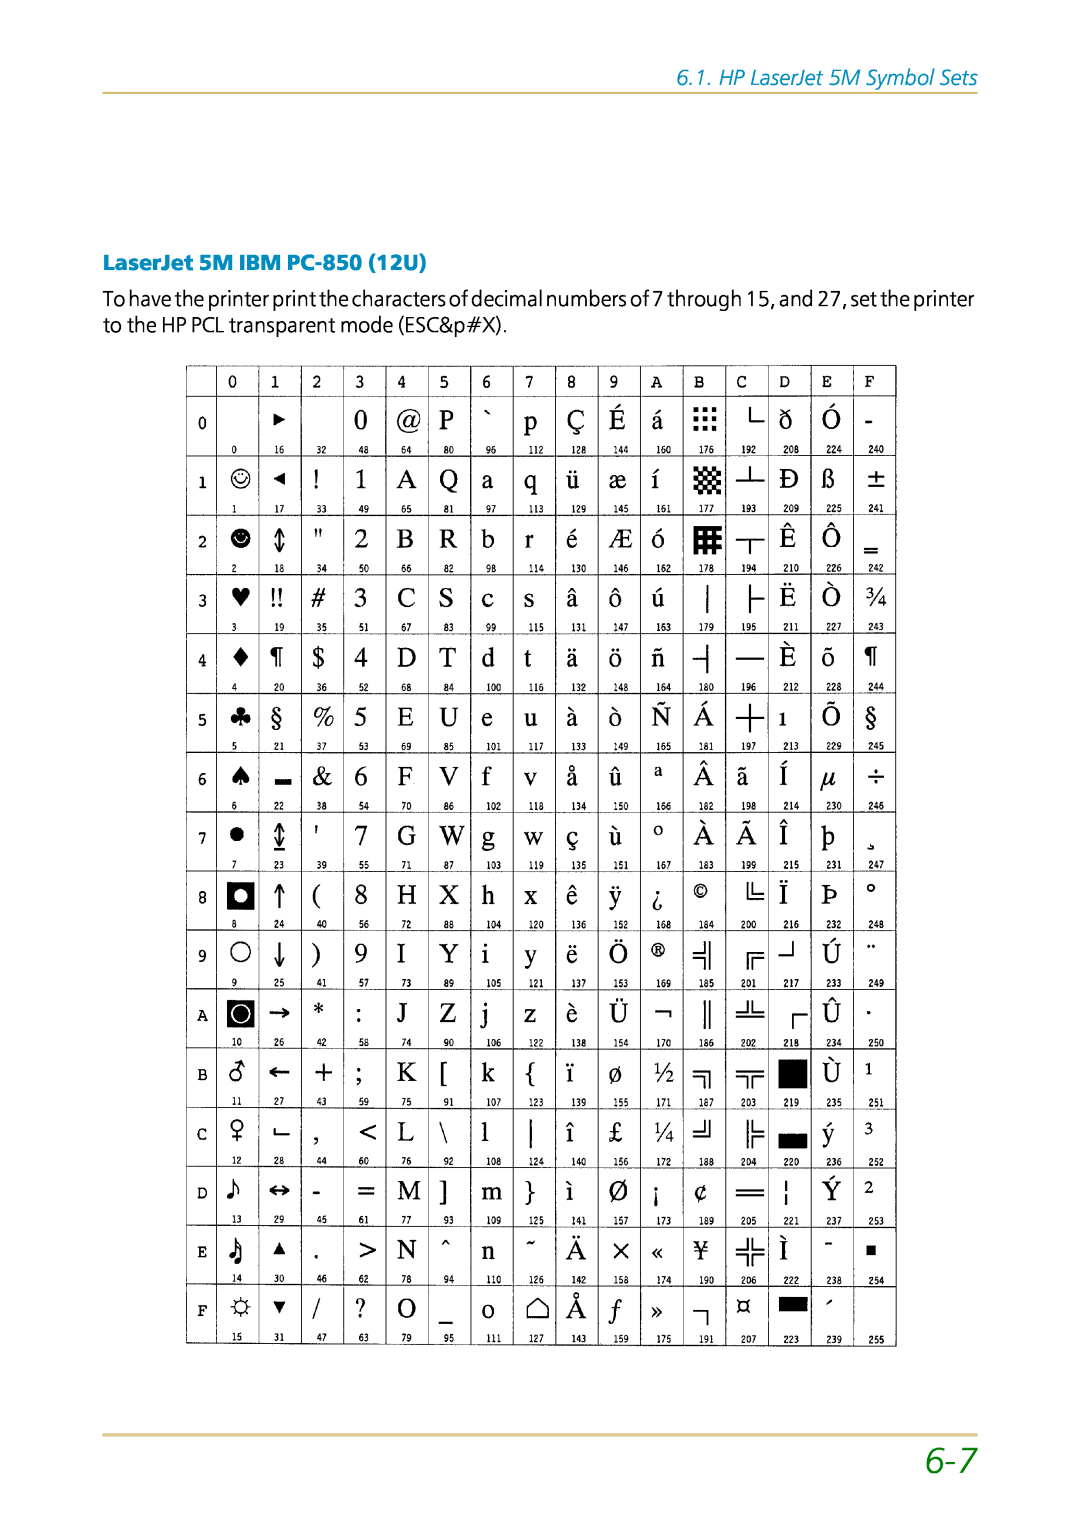 Kyocera FS-1700 user manual HP LaserJet 5M Symbol Sets, LaserJet 5M IBM PC-85012U 